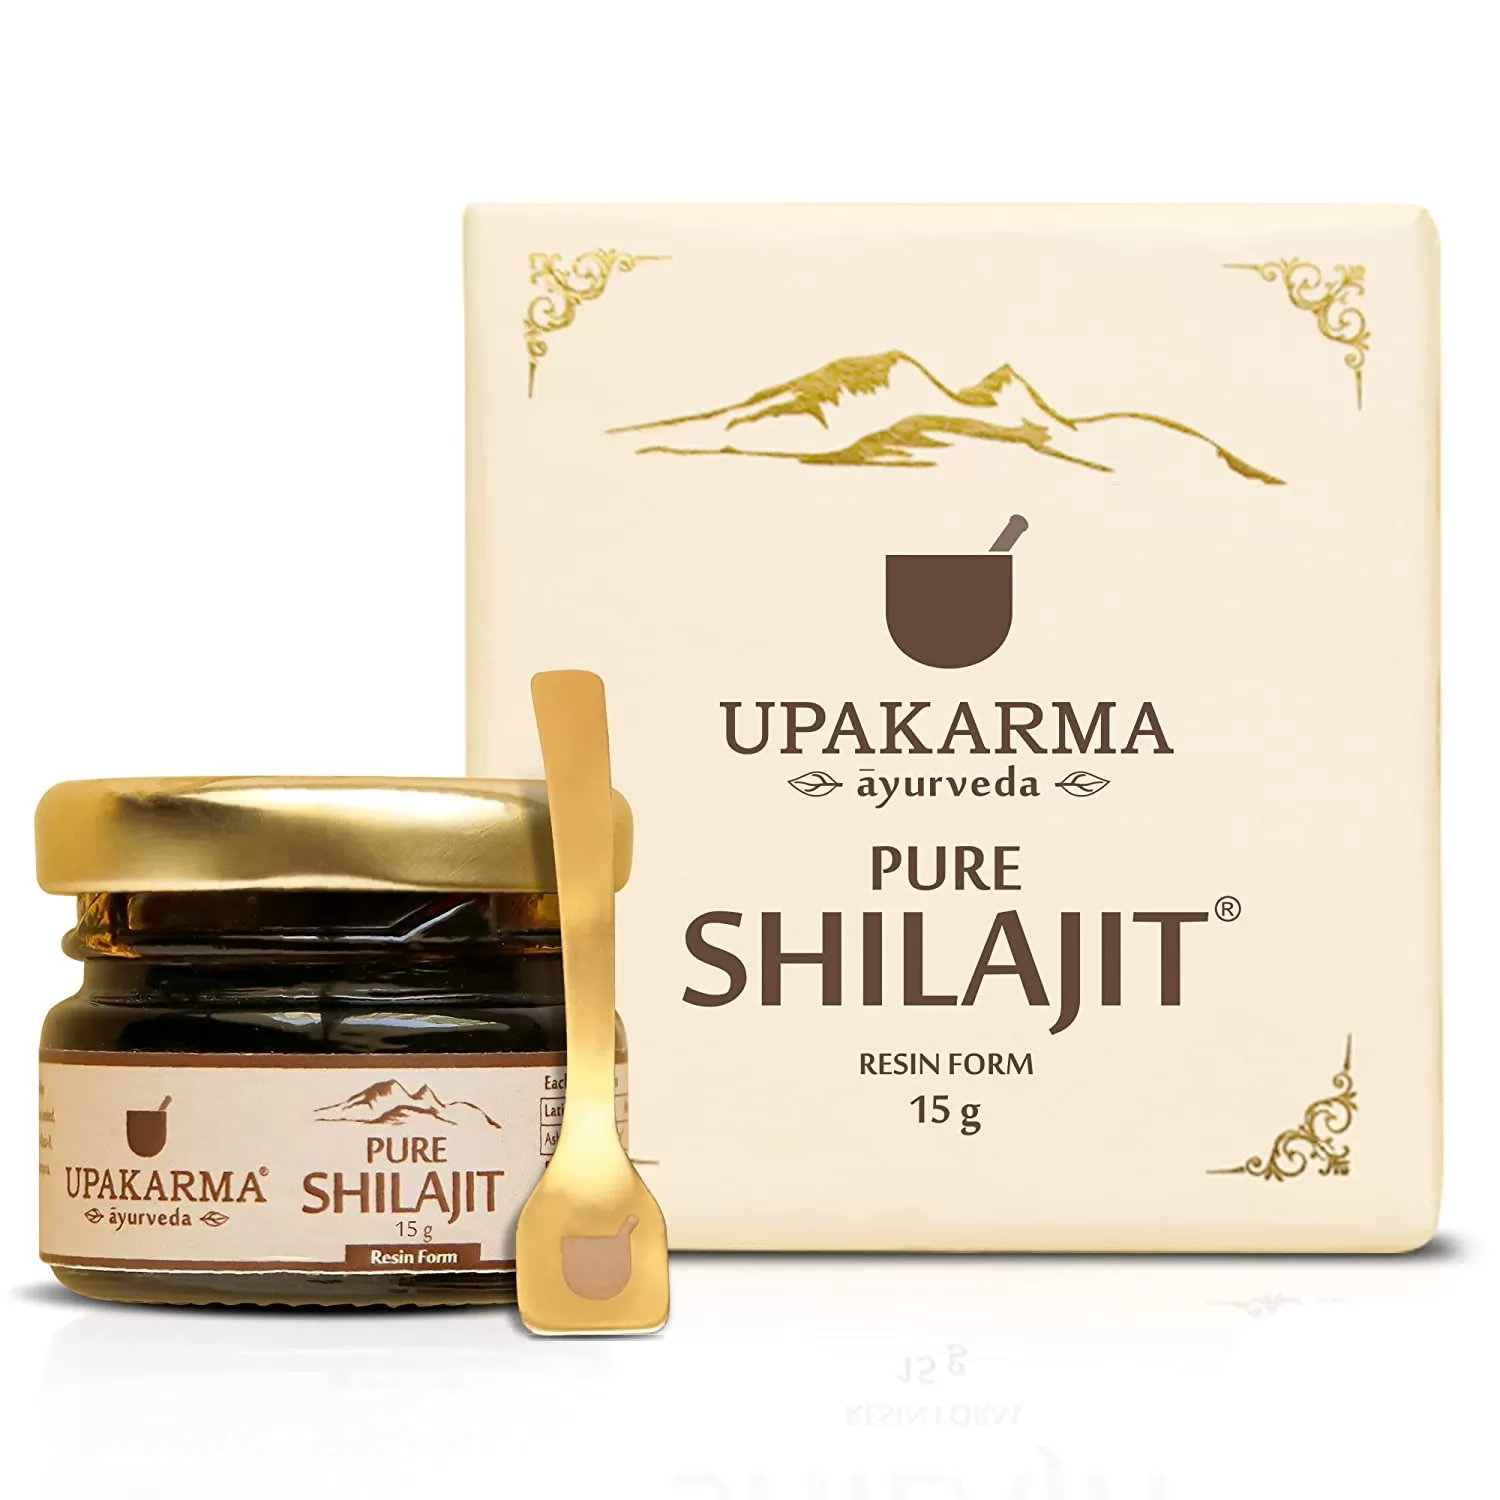 Upakarma Ayurveda Pure and Natural Shilajit Resin